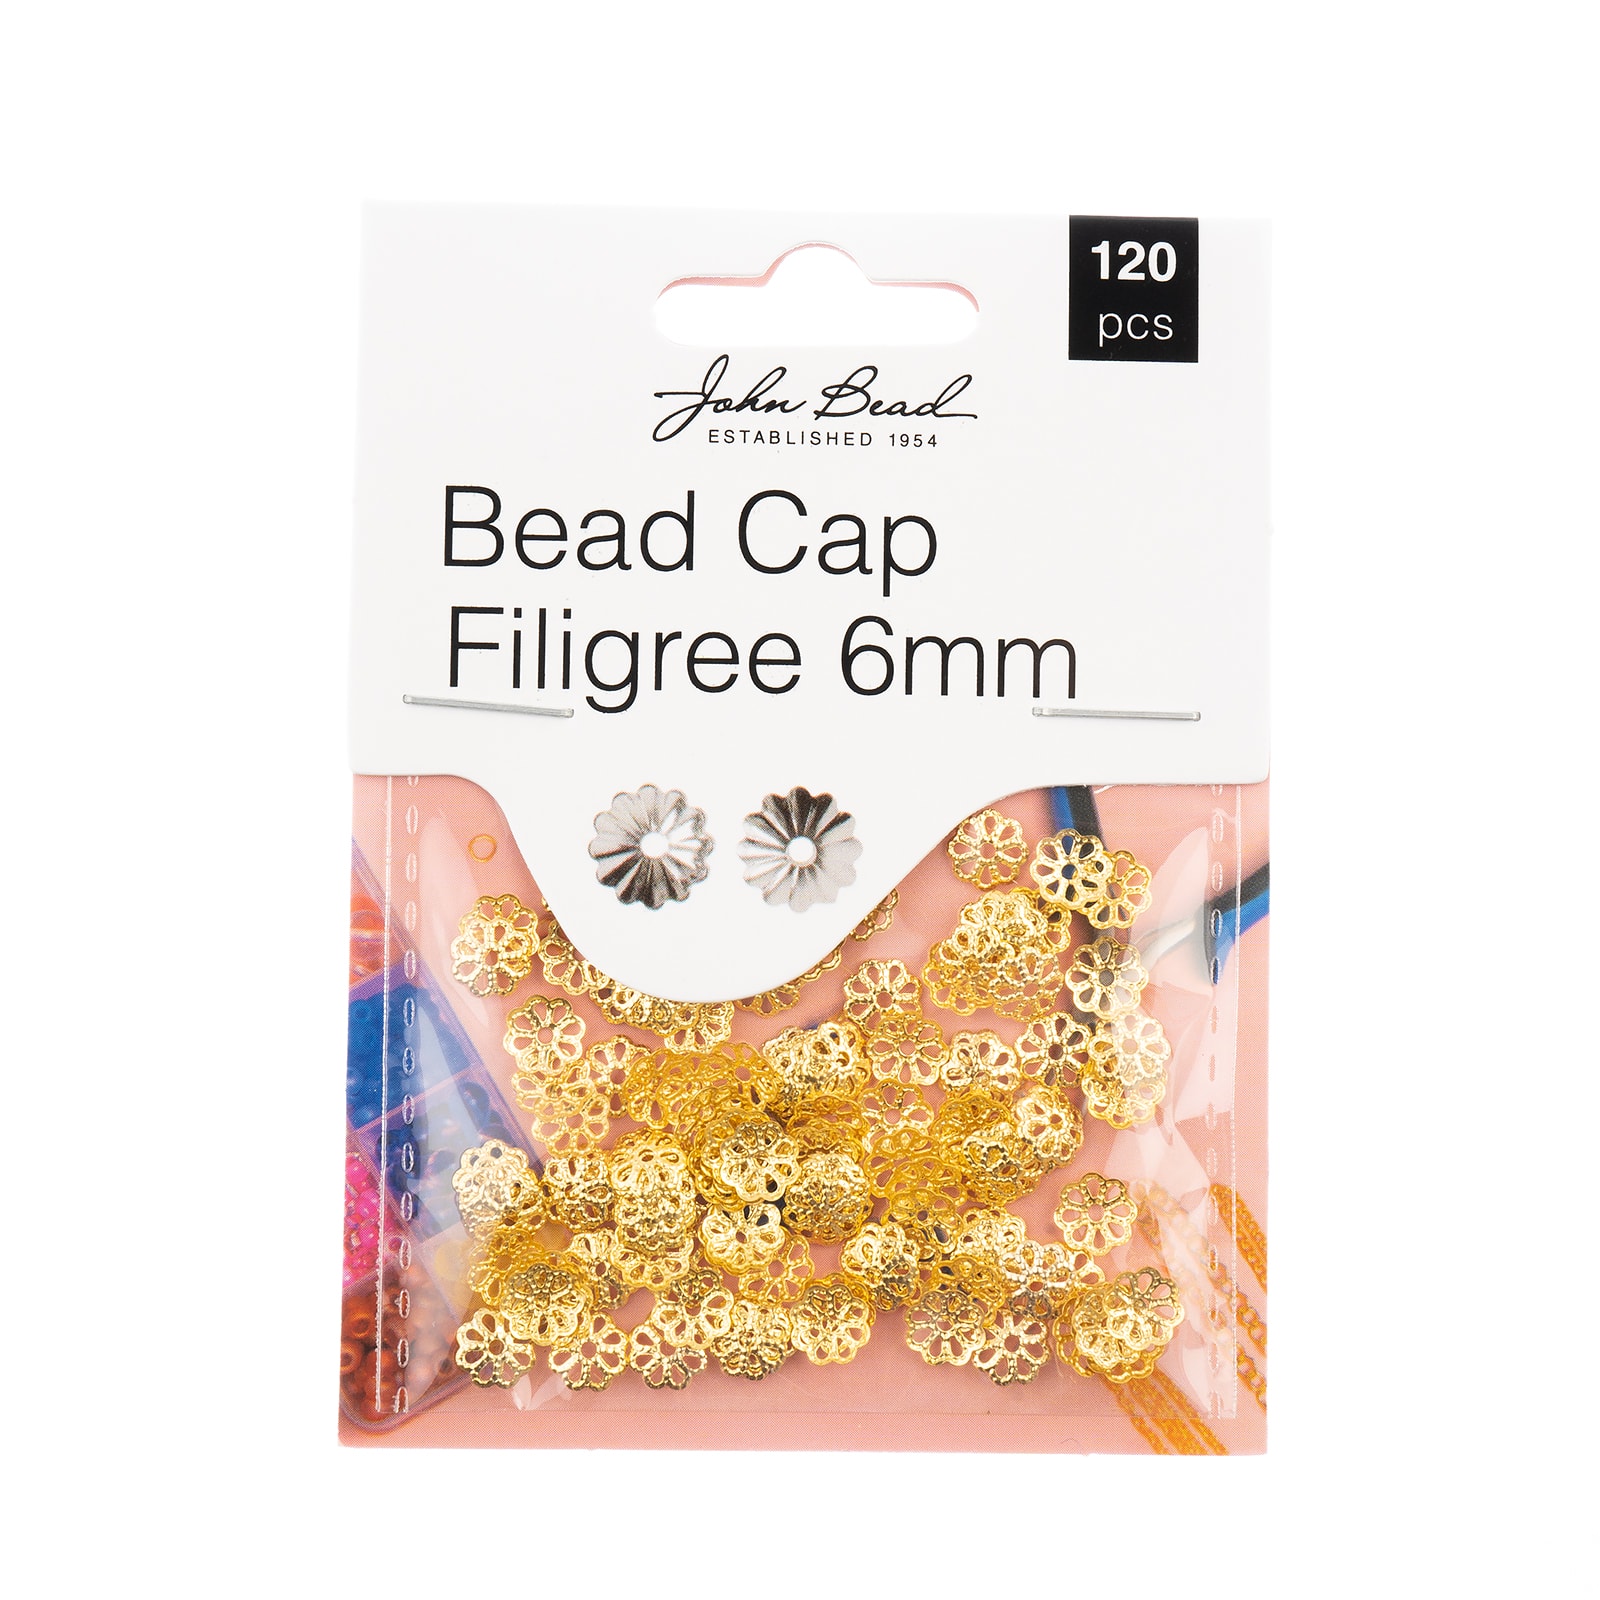 John Bead Must Have Findings 6mm Bead Cap Filigrees